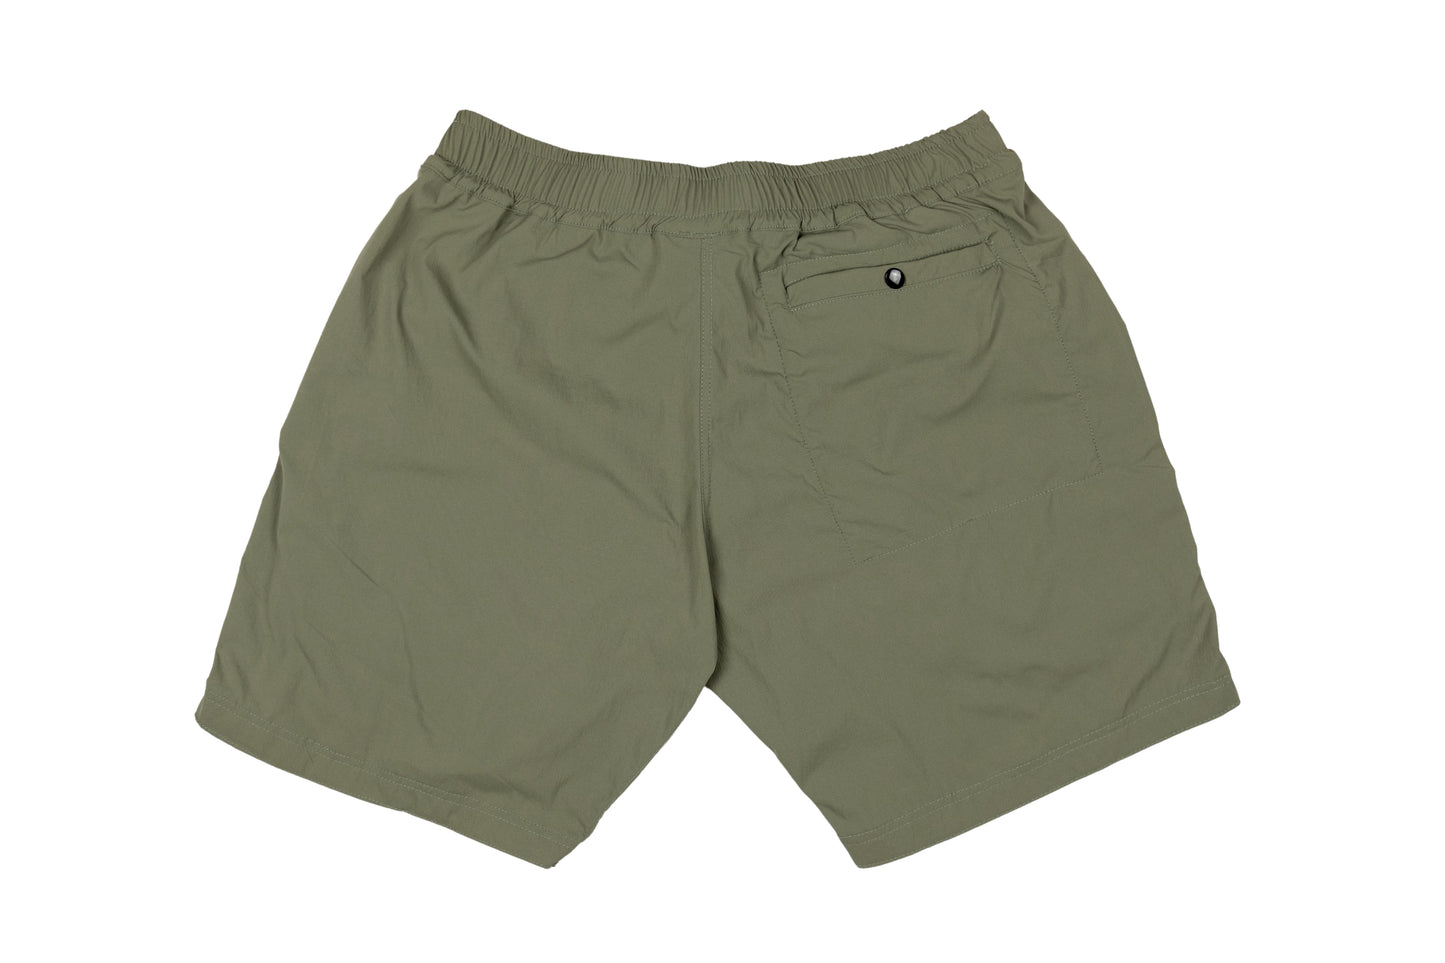 GW All-Rounder Nylon Shorts (Sage)